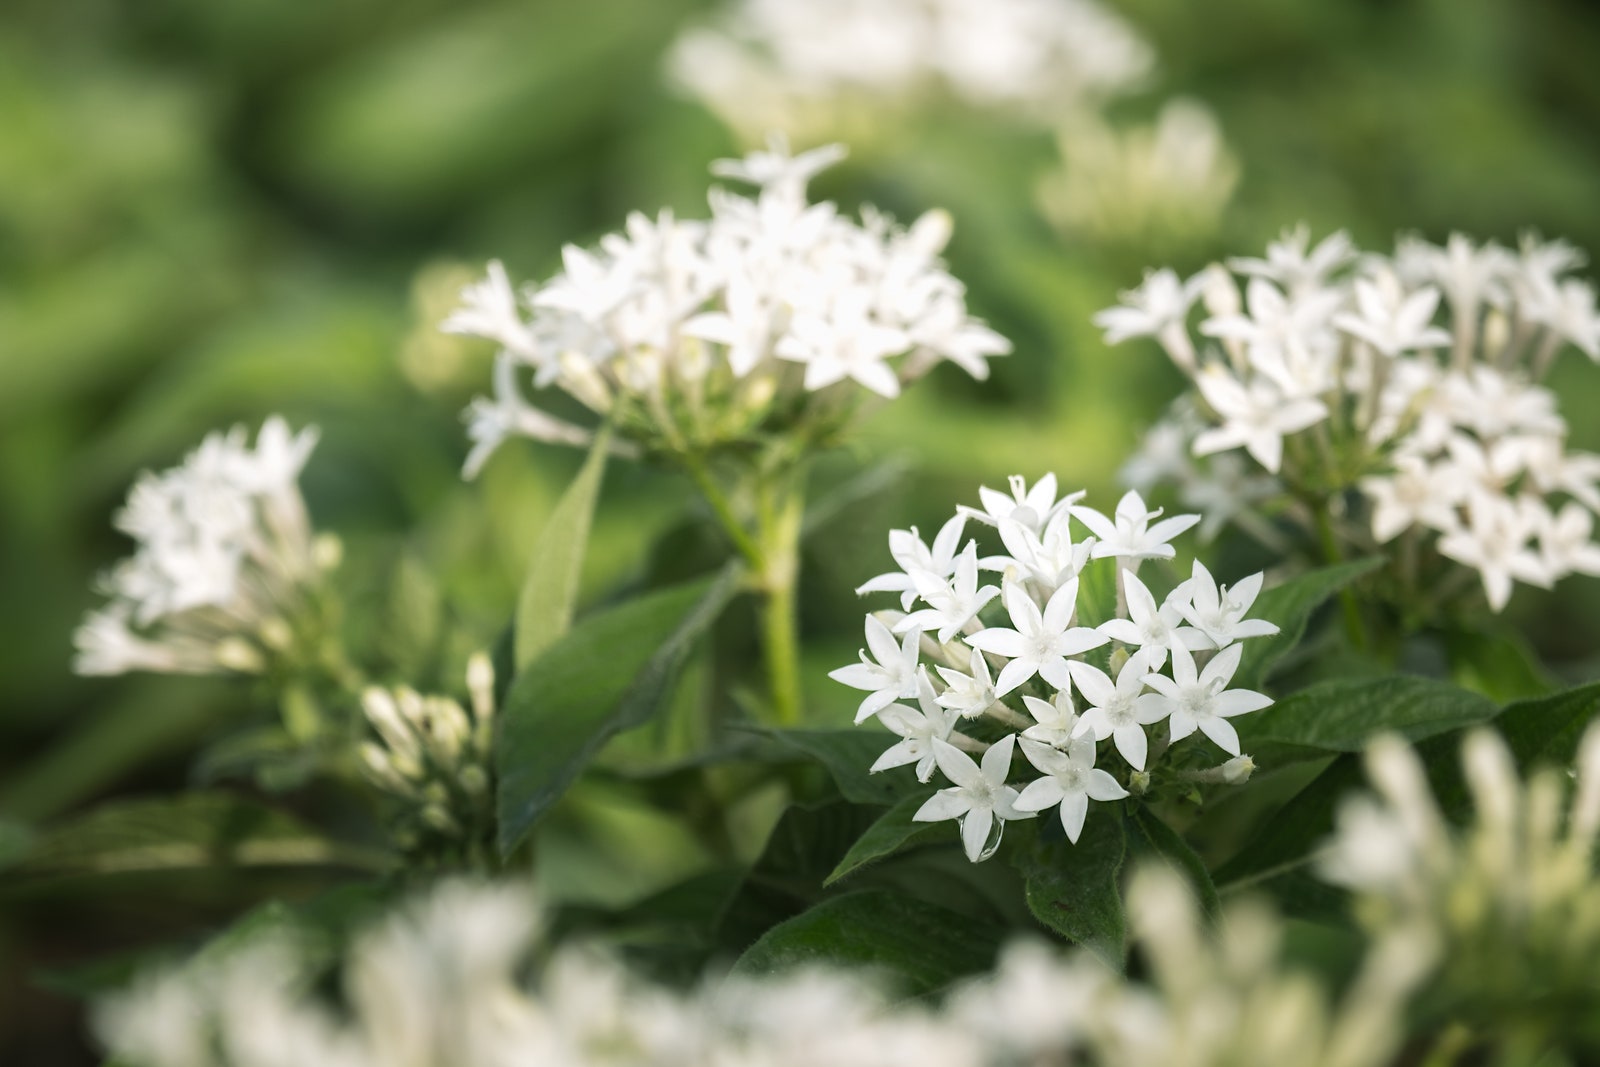 White Pentas lanceolata or Egyptian star cluster flowers blooming in garden.